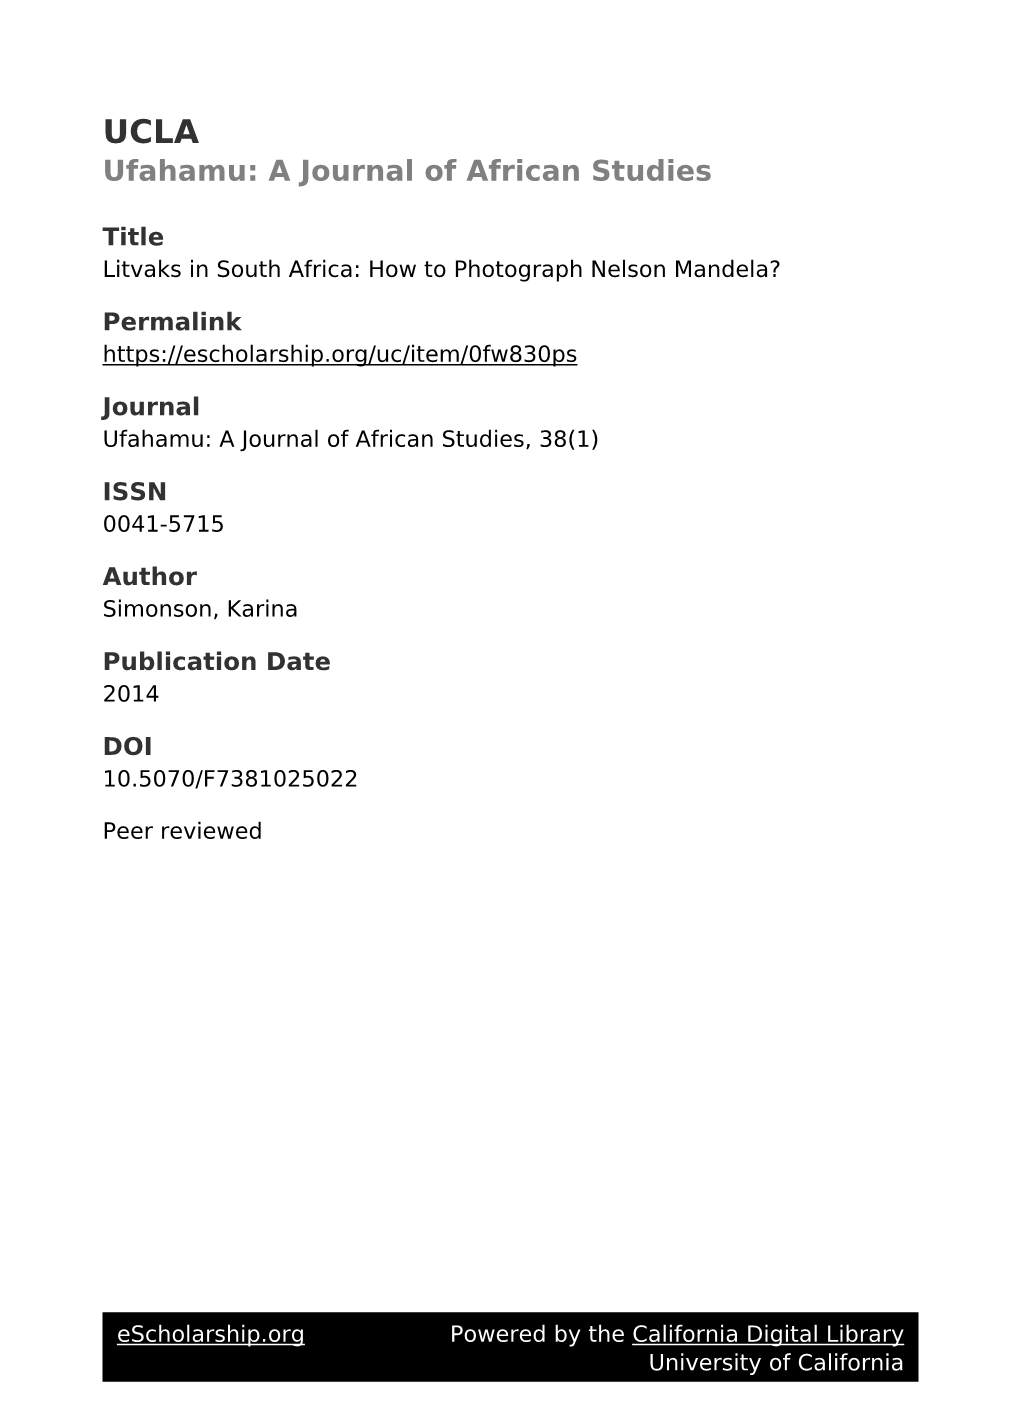 Litvaks in South Africa: How to Photograph Nelson Mandela?